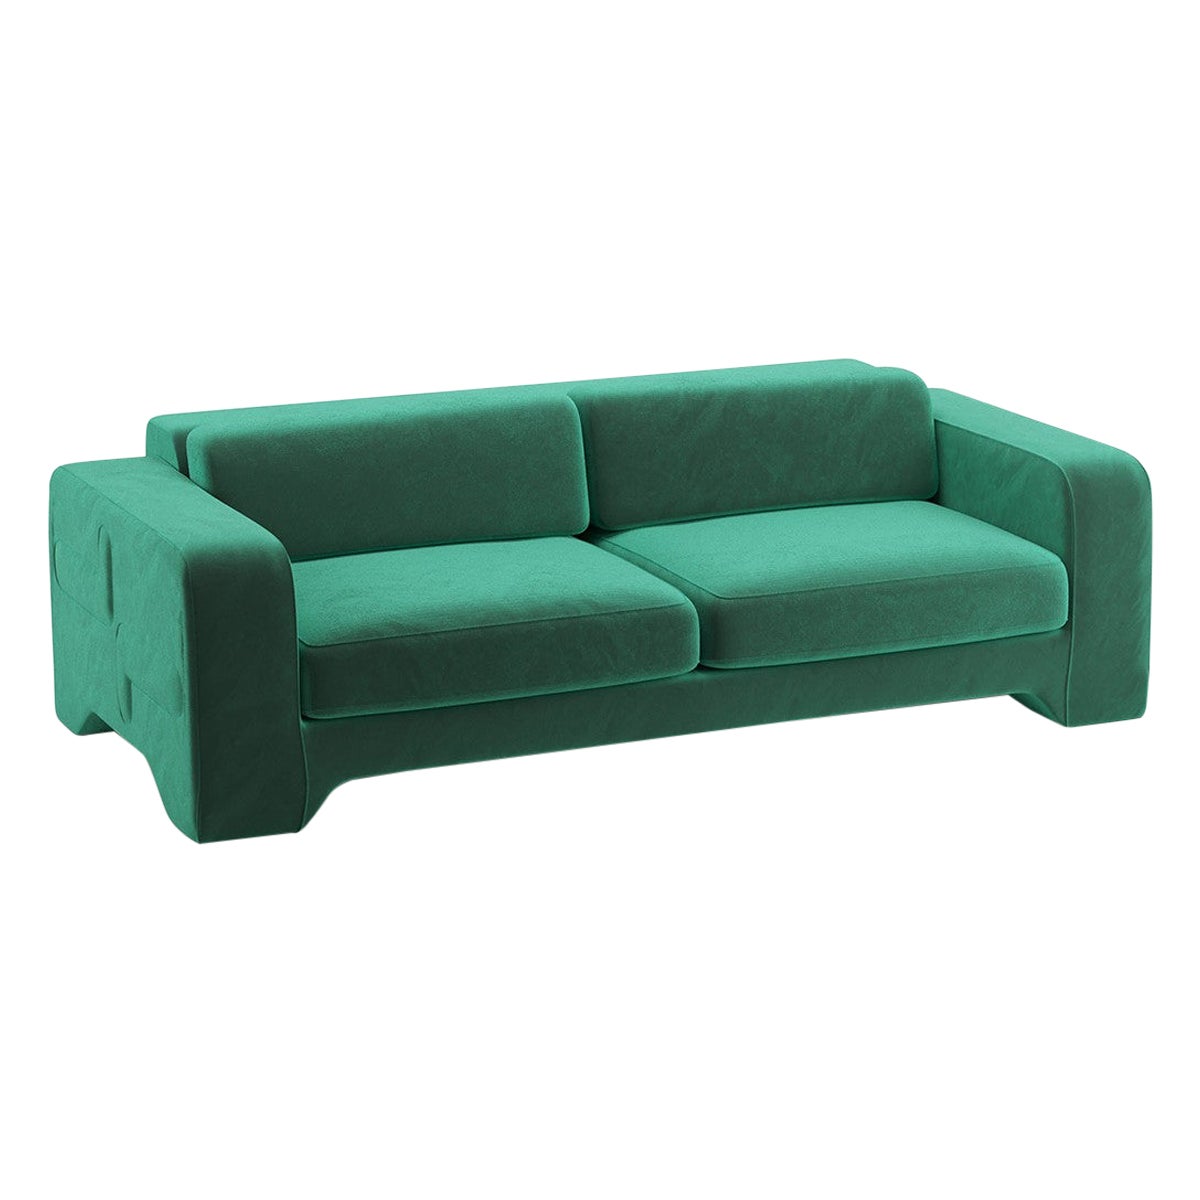 Popus Editions Giovanna 2.5 Seater Sofa in Green '772256' Como Velvet Upholstery